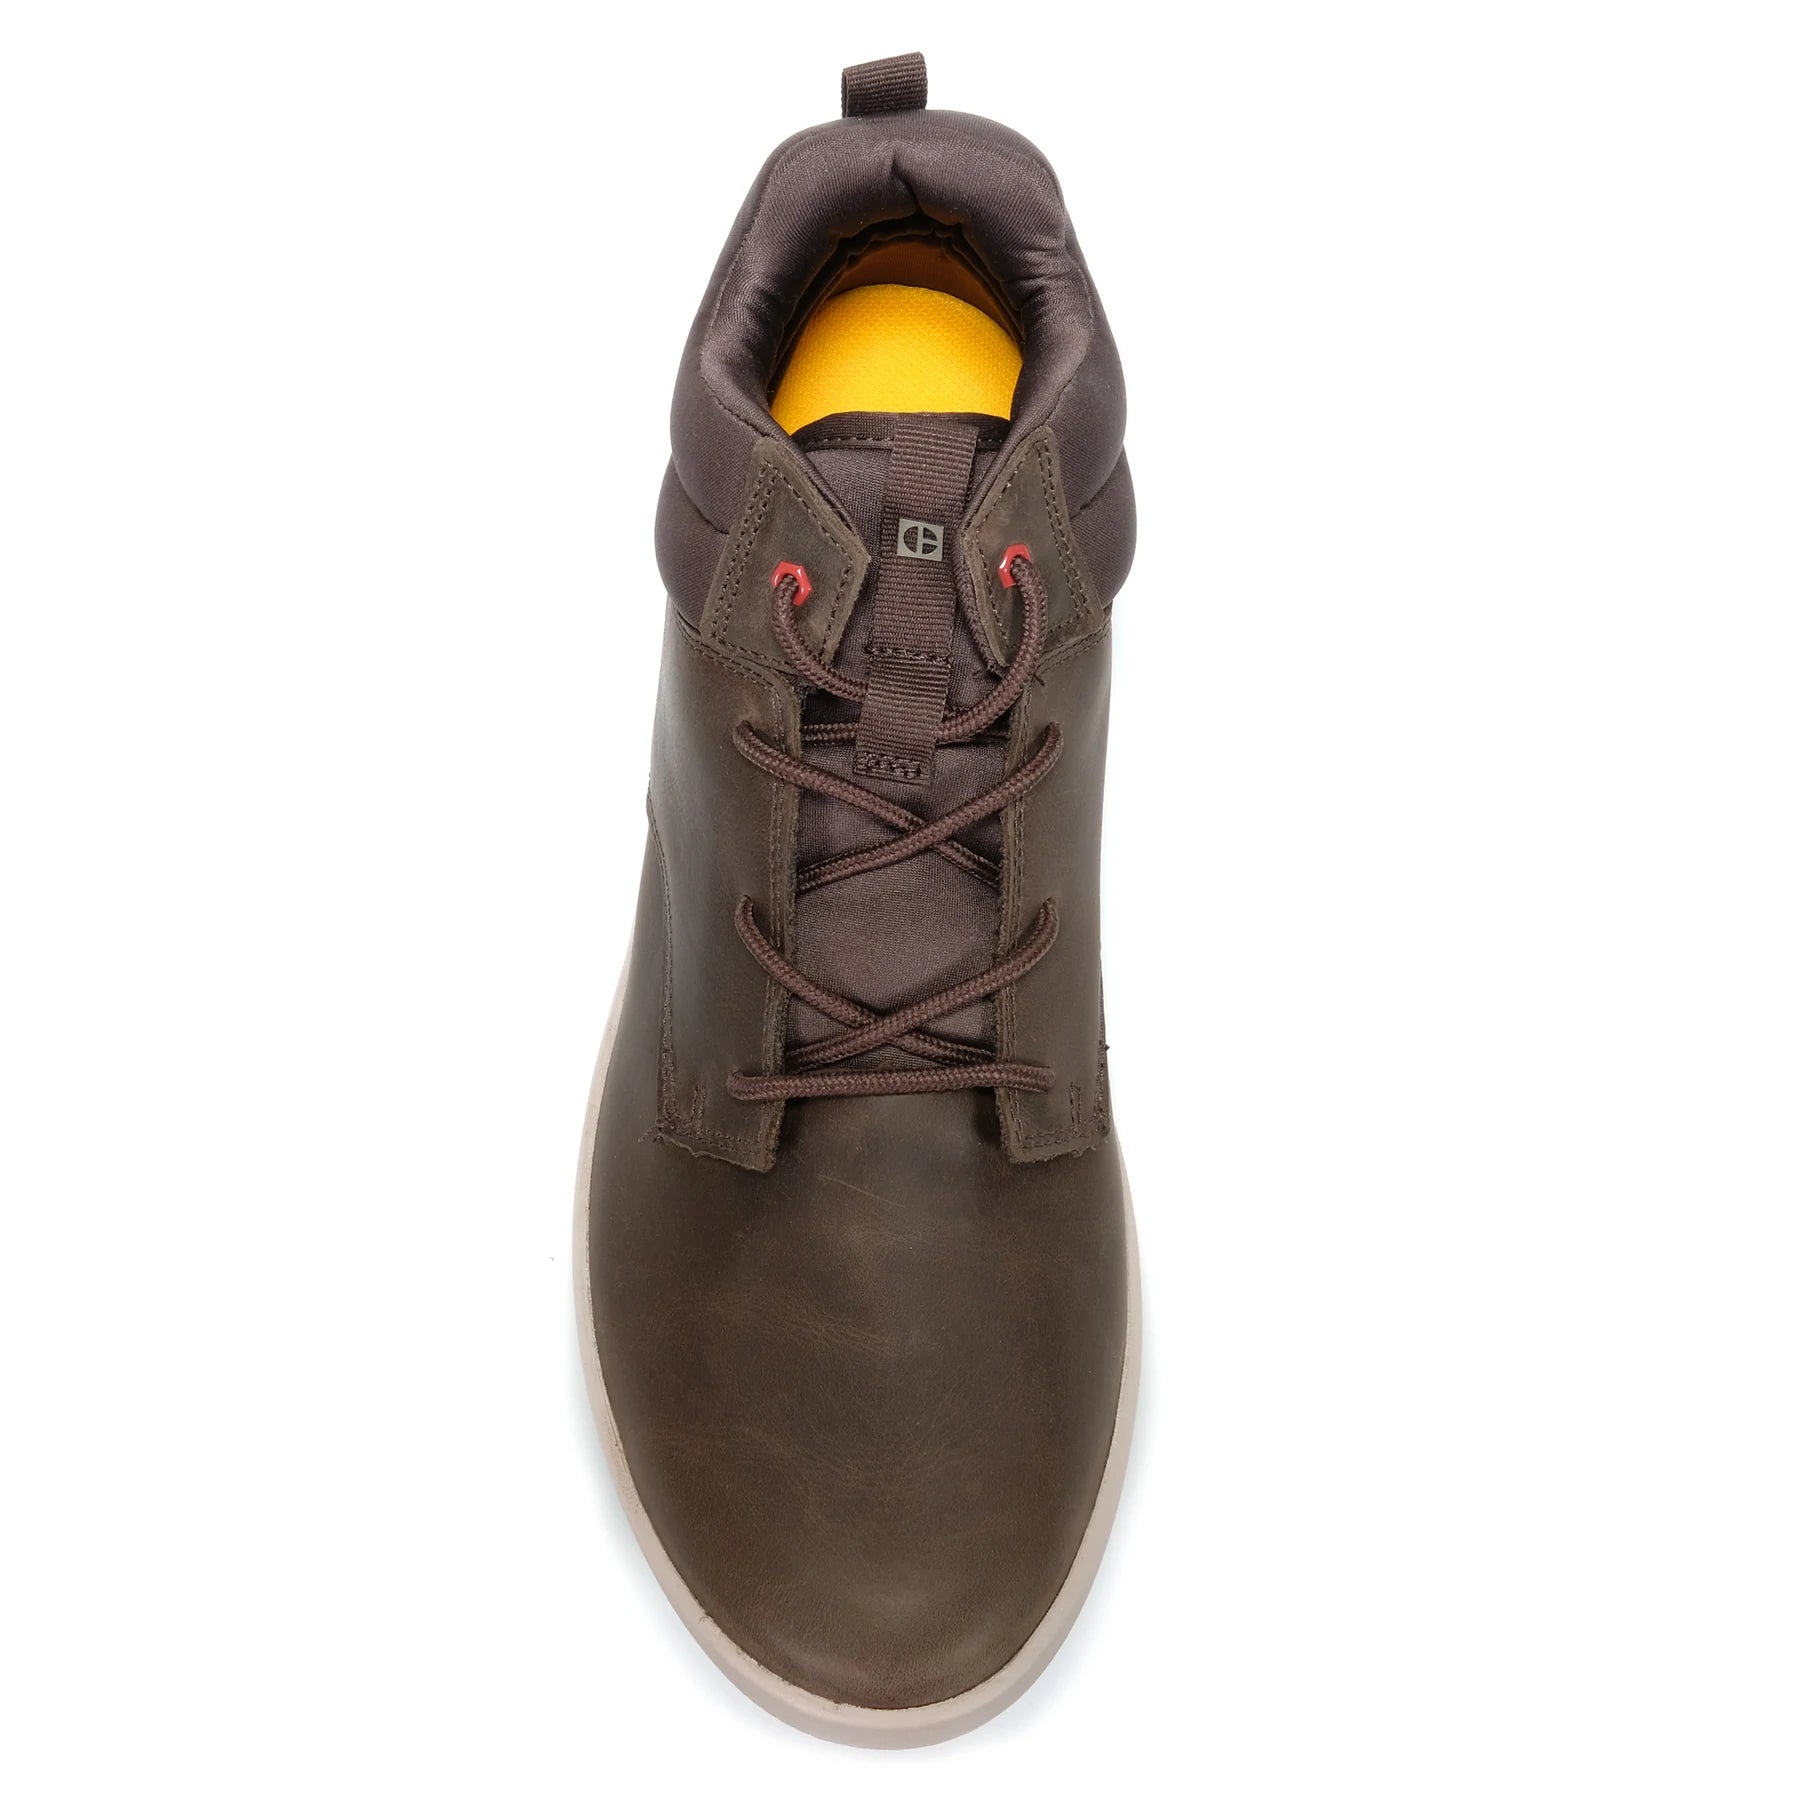 Proxy Hi - shoe&amp;me - Caterpillar - Boot - Boots, Mens, Winter